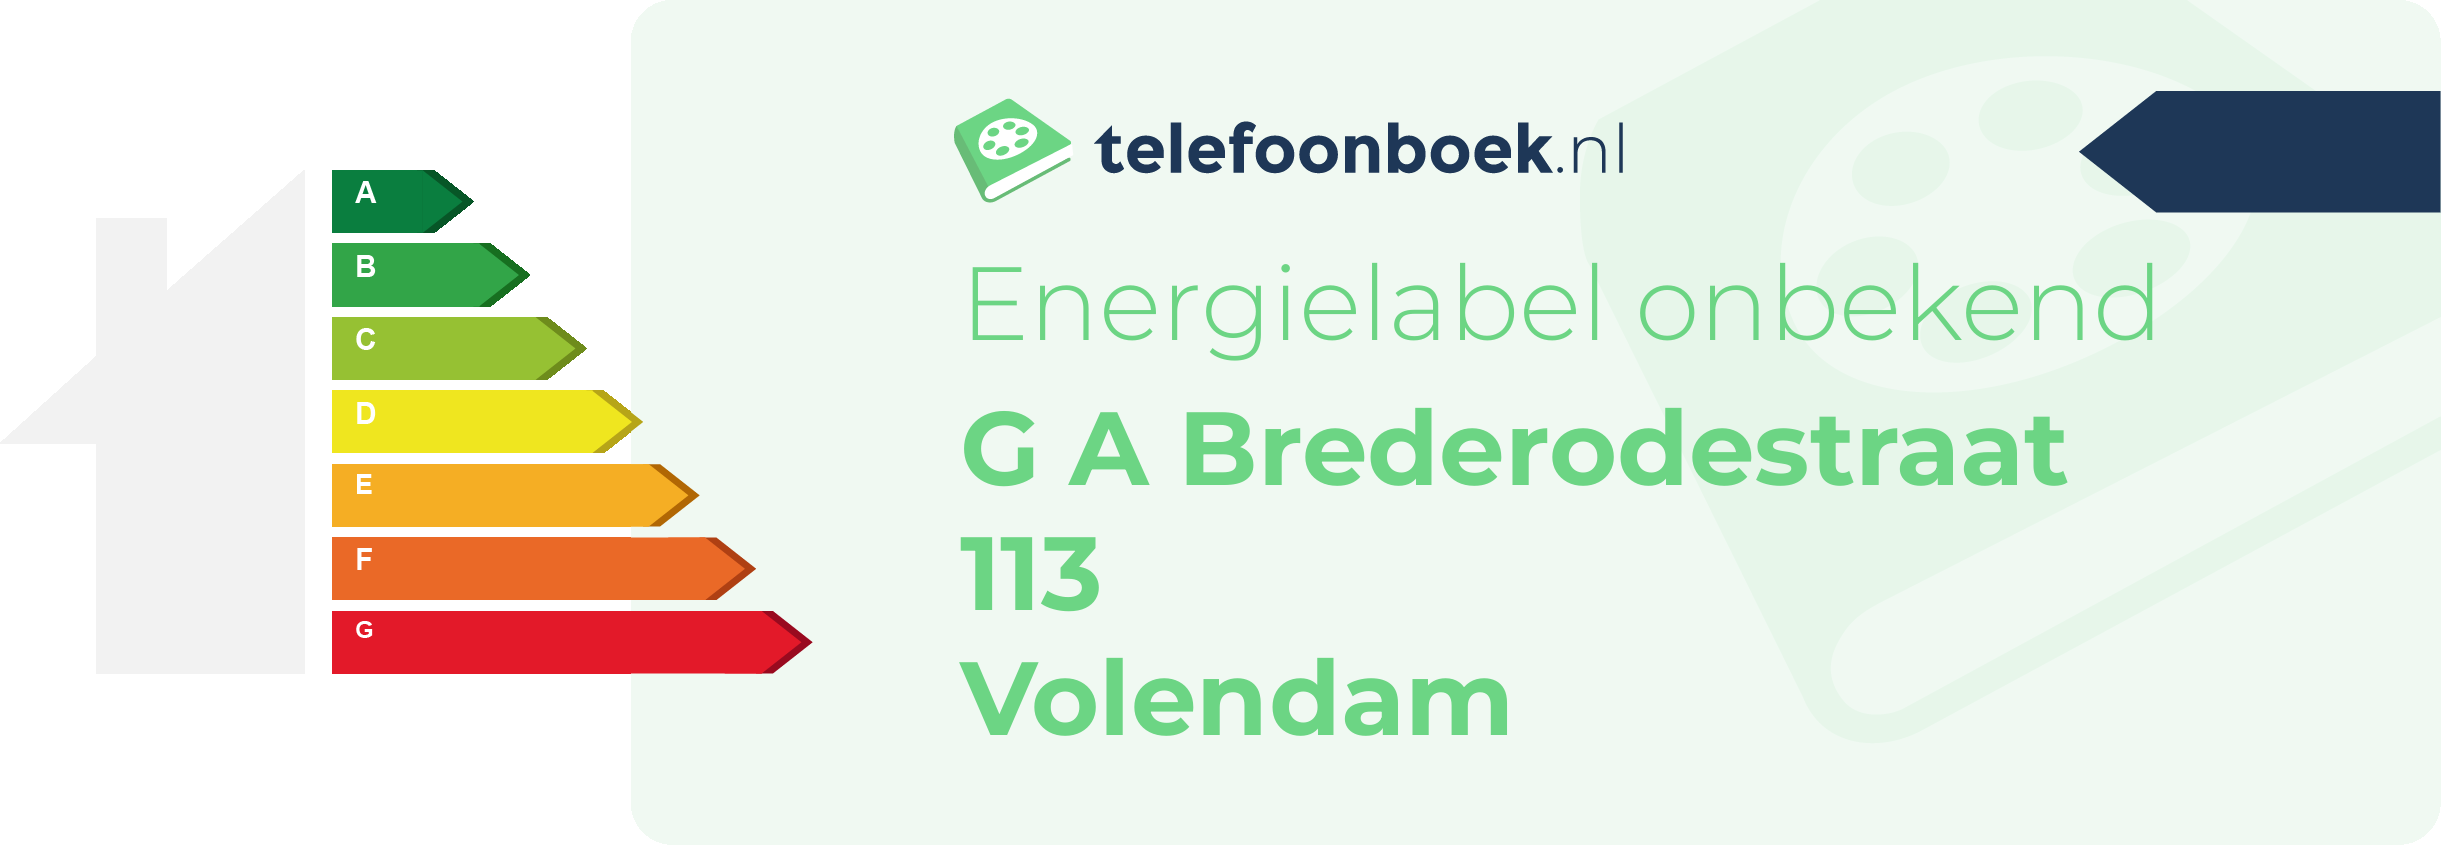 Energielabel G A Brederodestraat 113 Volendam